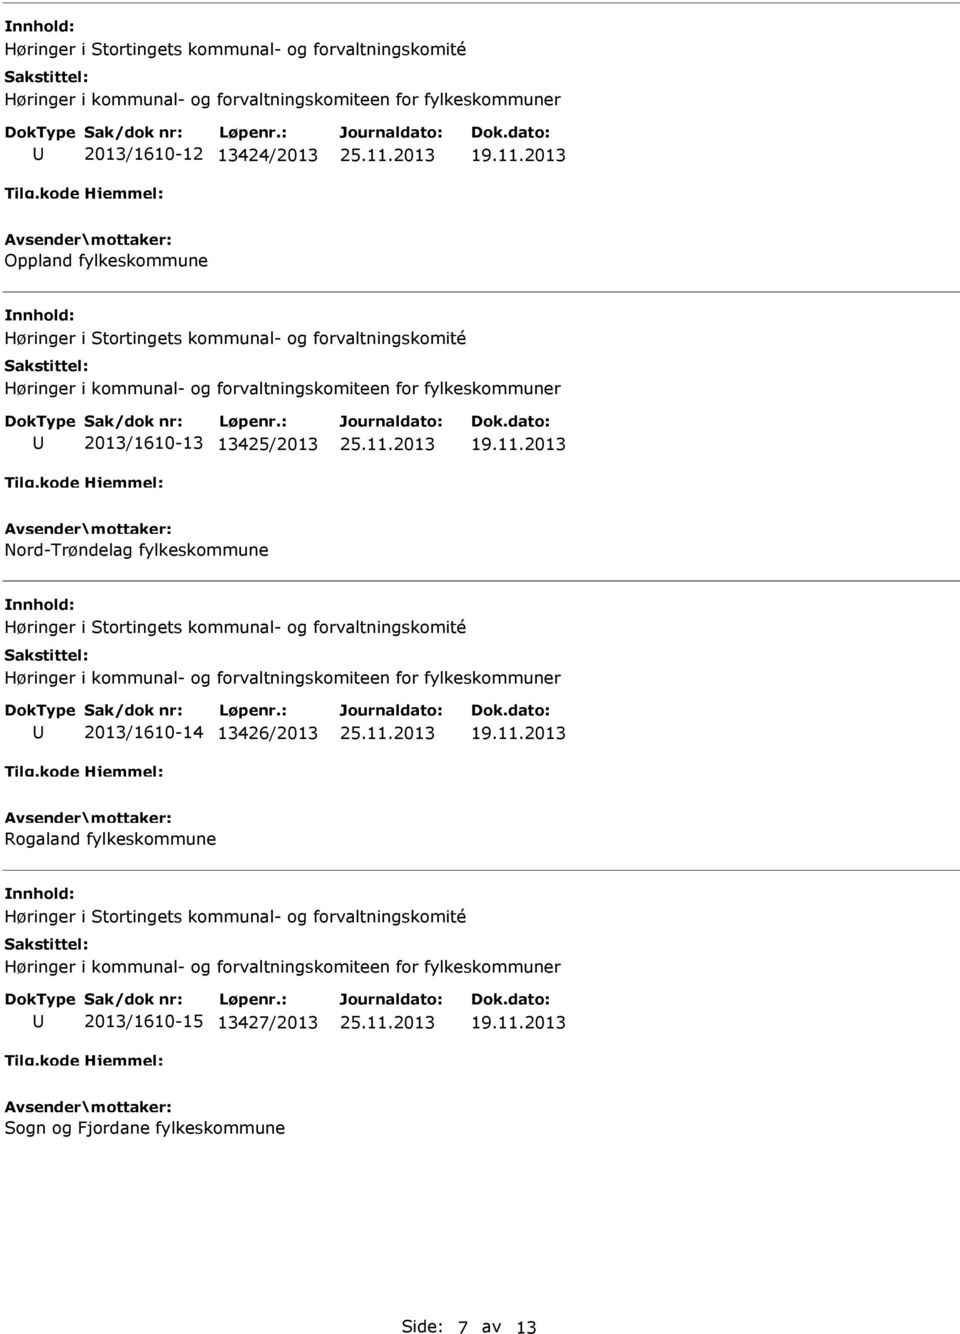 2013/1610-14 13426/2013 Rogaland fylkeskommune